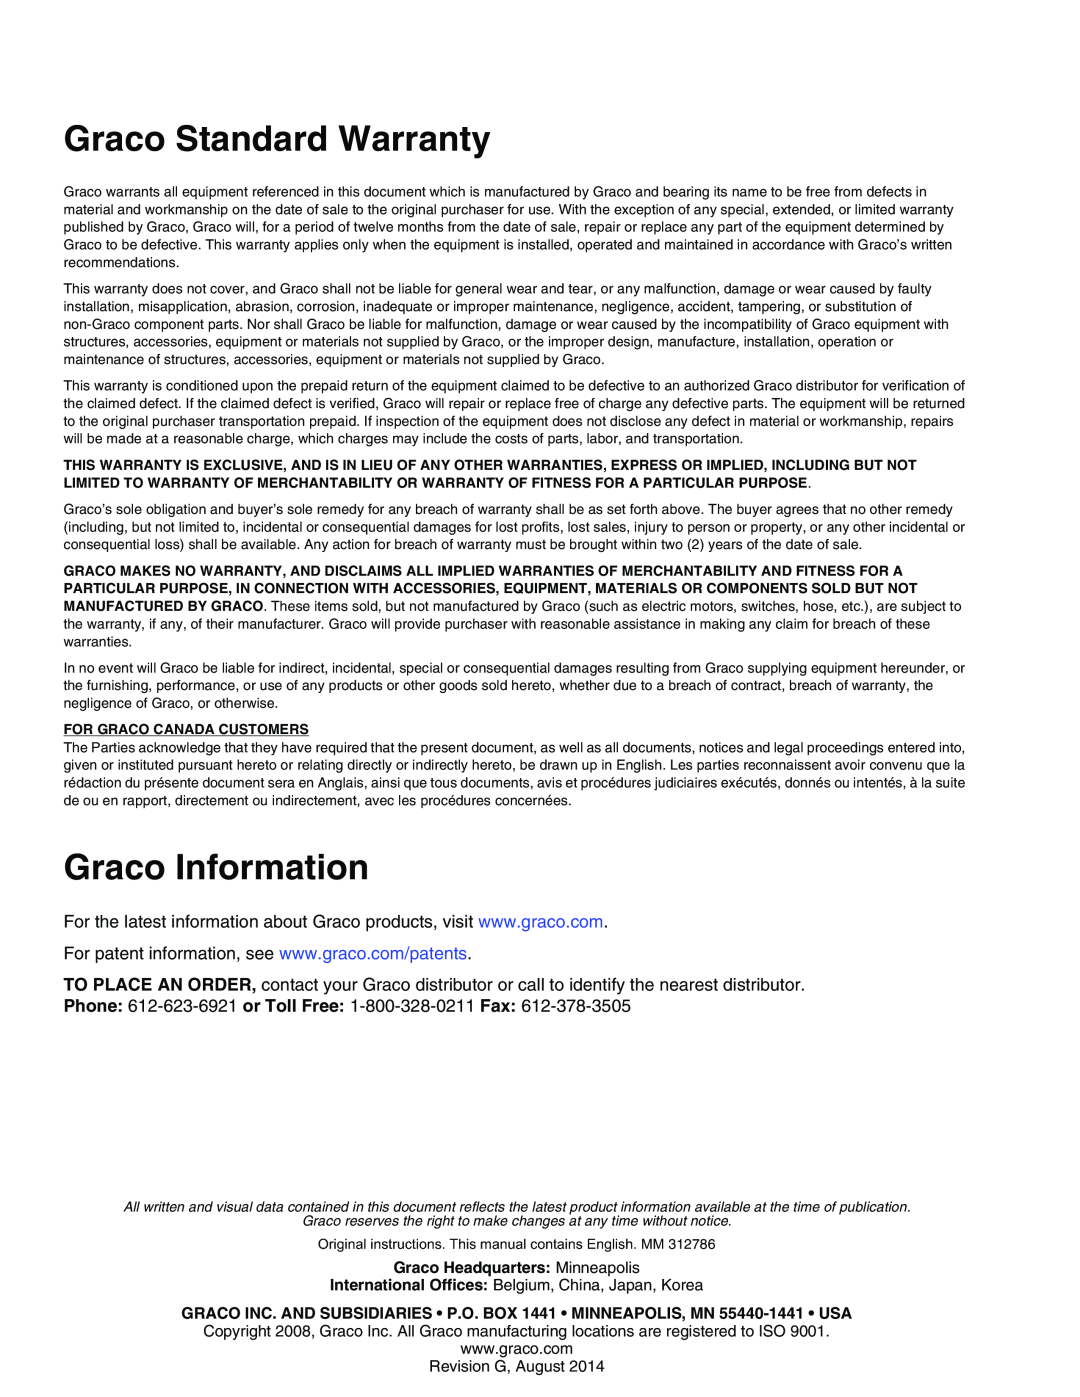 Graco TI12954a, TI12743a Graco Standard Warranty, Graco Information, International Offices Belgium, China, Japan, Korea 